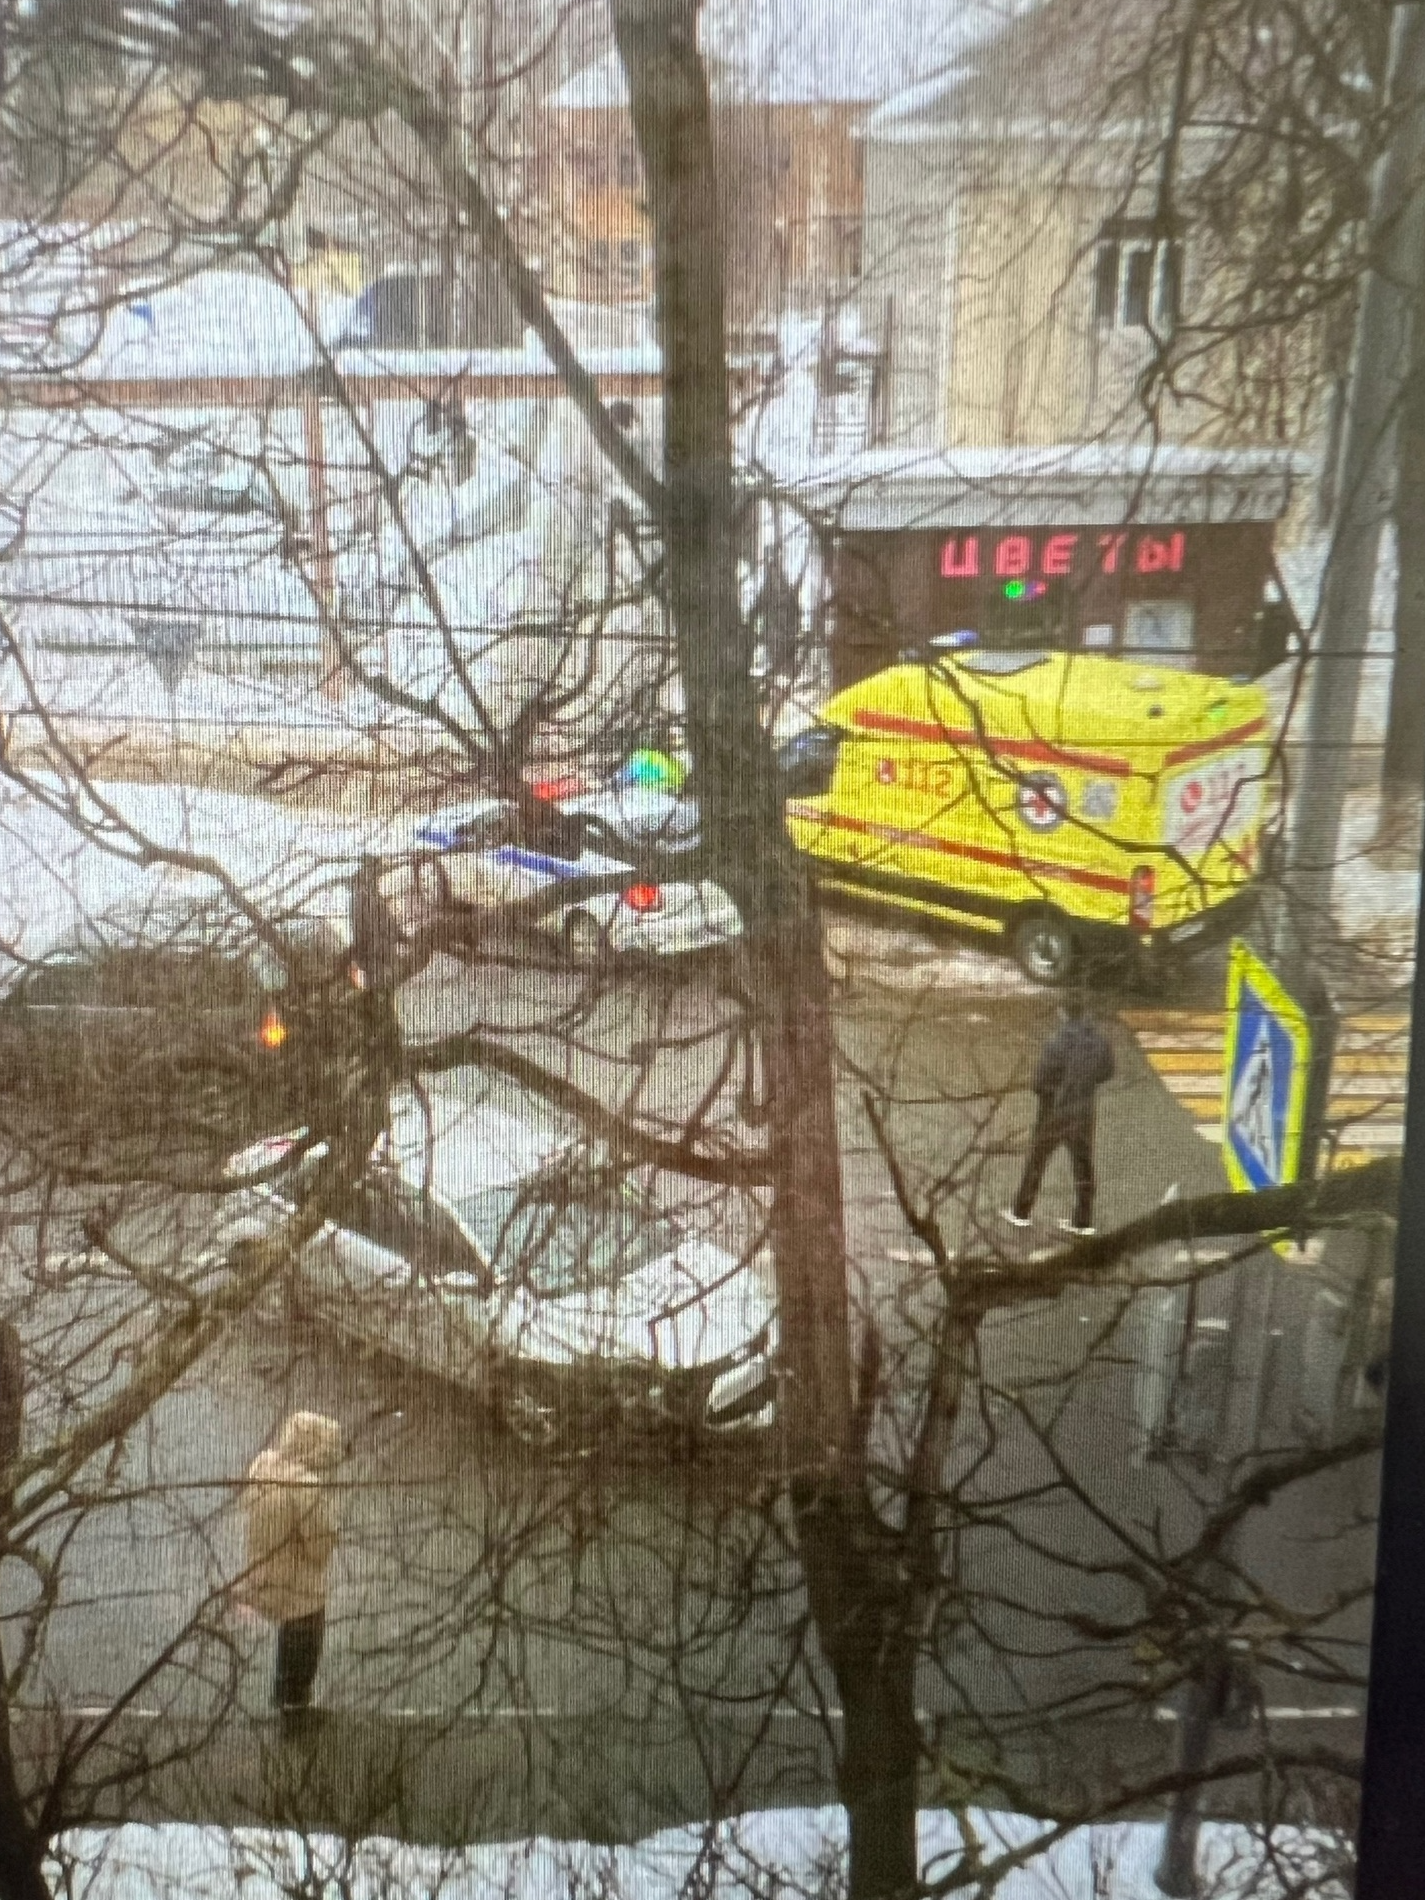 Авария с участием трех машин произошла на улице Ленина в Наро-Фоминске